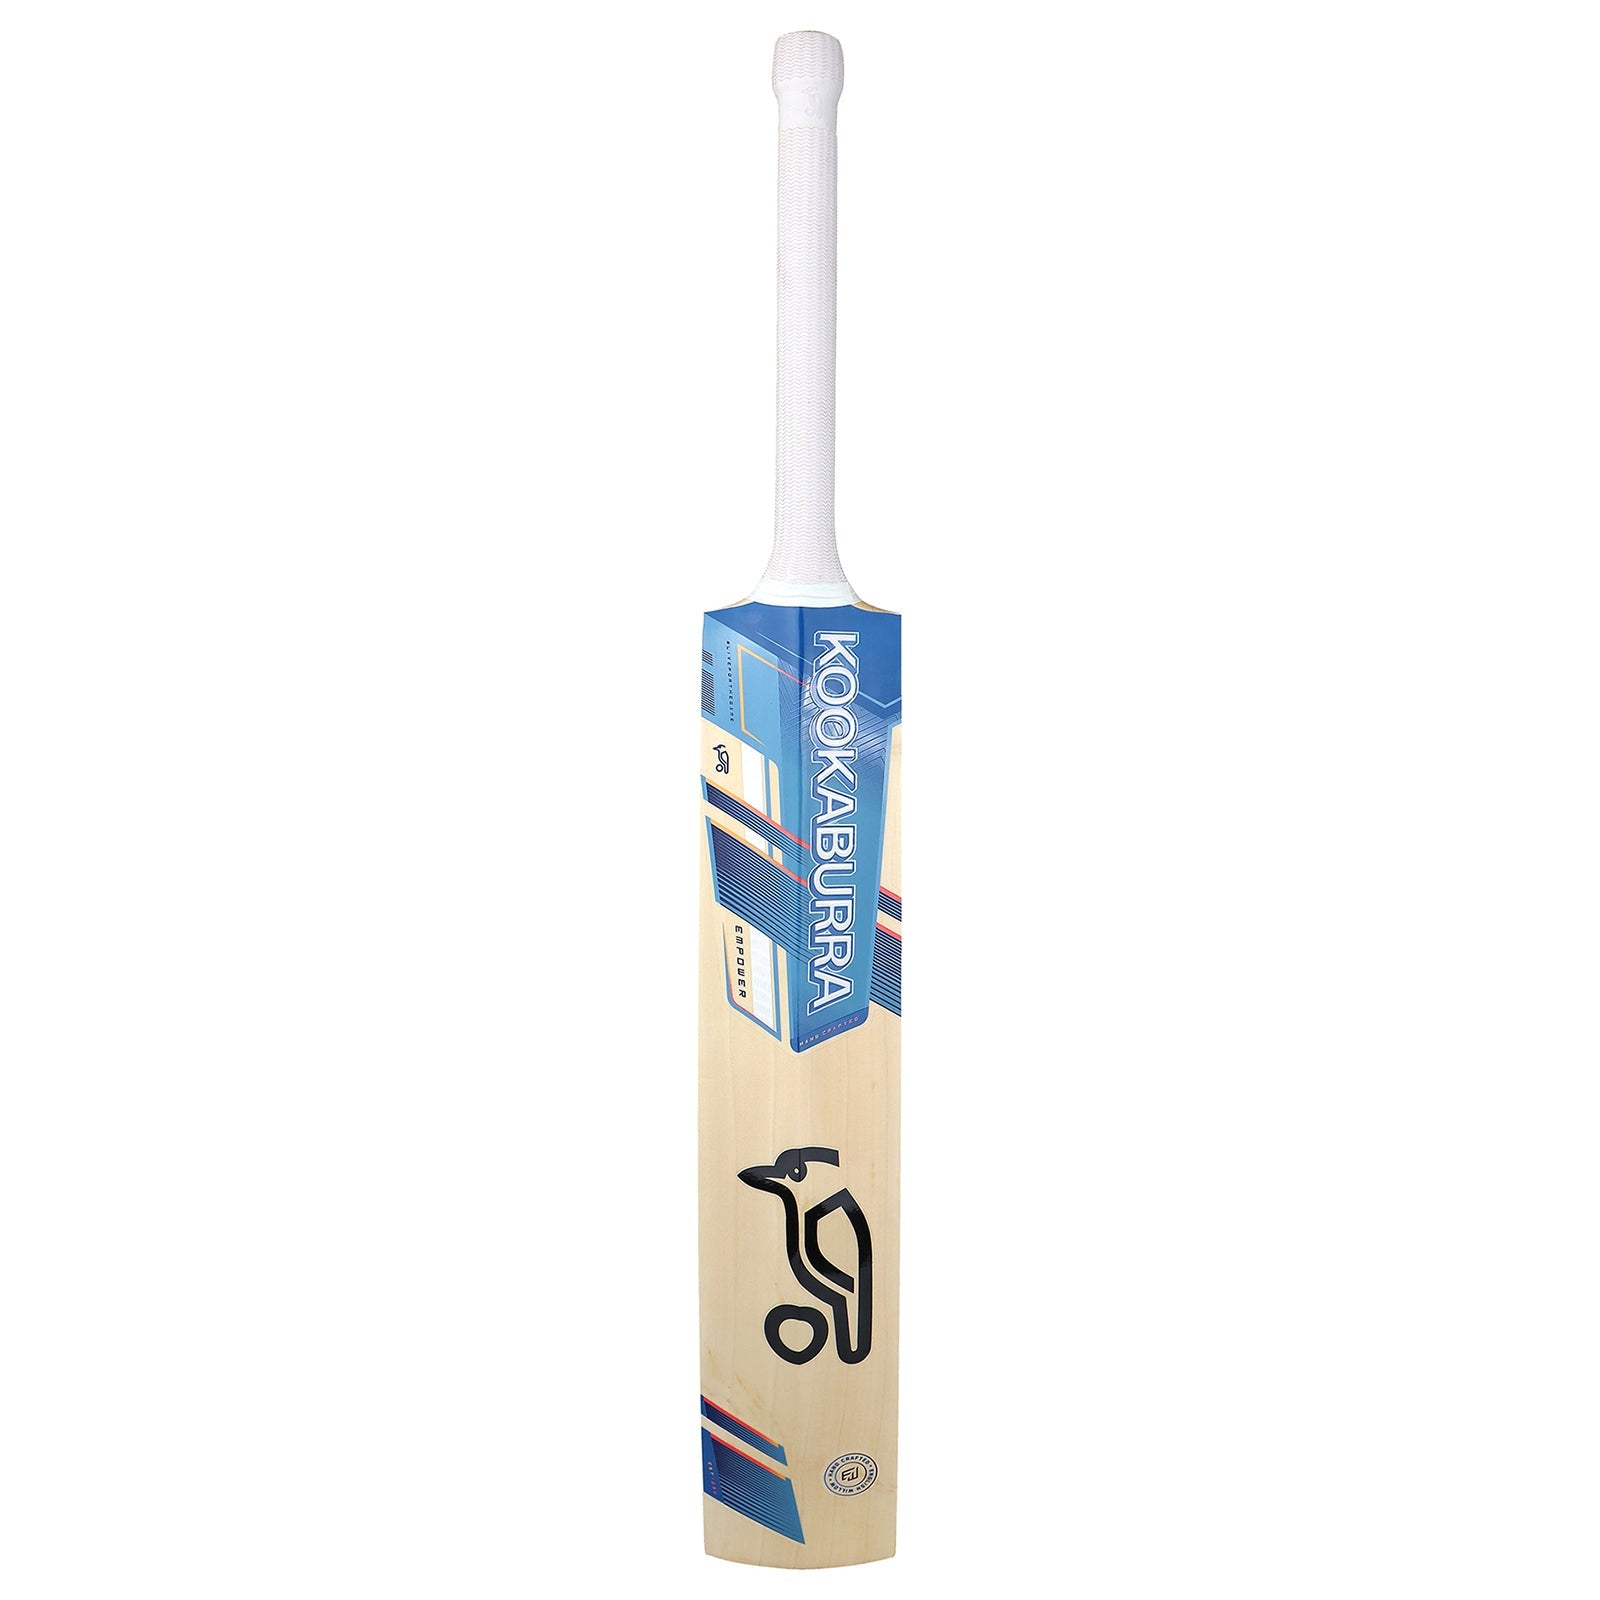 Kookaburra Empower Pro 3.0 Cricket Bat - Senior Long Blade